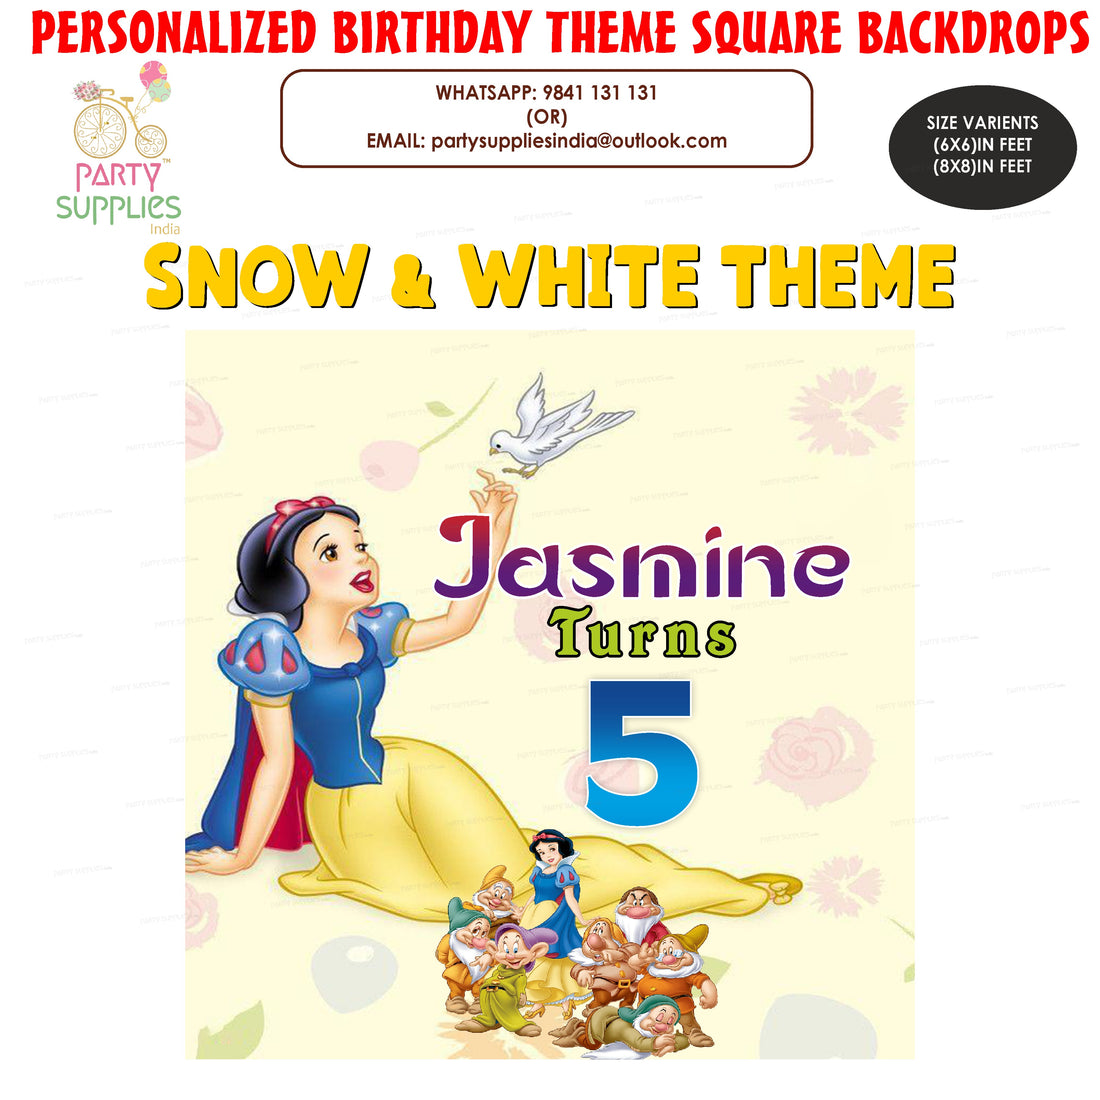 PSI Snow And White Theme Square Backdrop